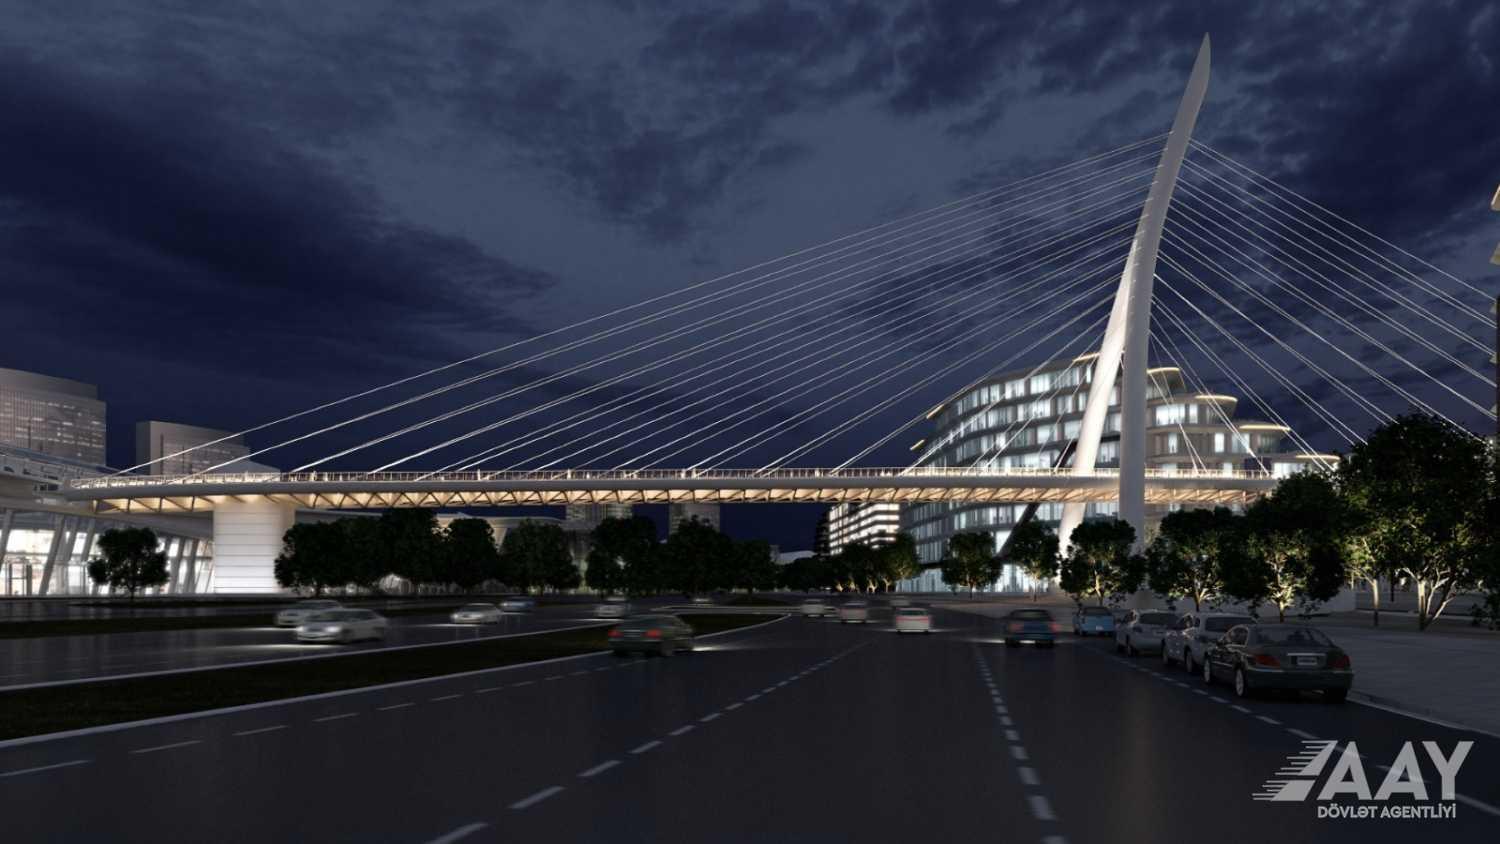 Azerbaijan's Baku sees construction of unique pedestrian bridge (PHOTO)